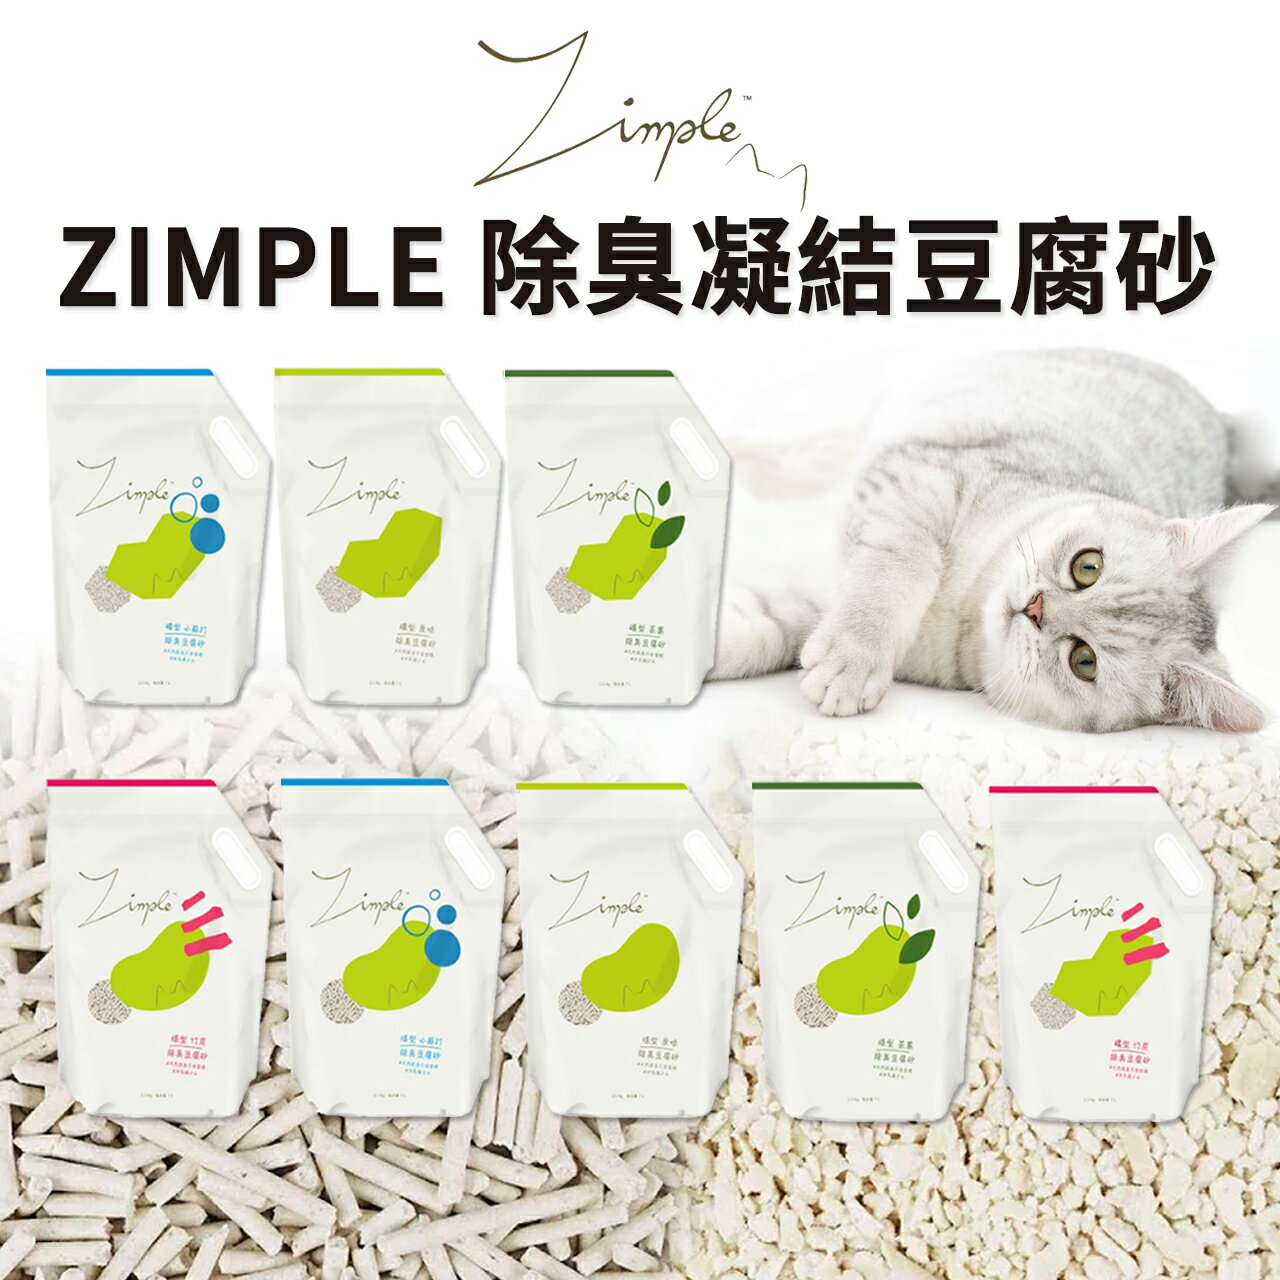 【PETMART】 Zimple 除臭凝結豆腐砂 條型 礦型 豆腐砂 貓砂 原味/竹炭/茶葉/小蘇打 2.5kg